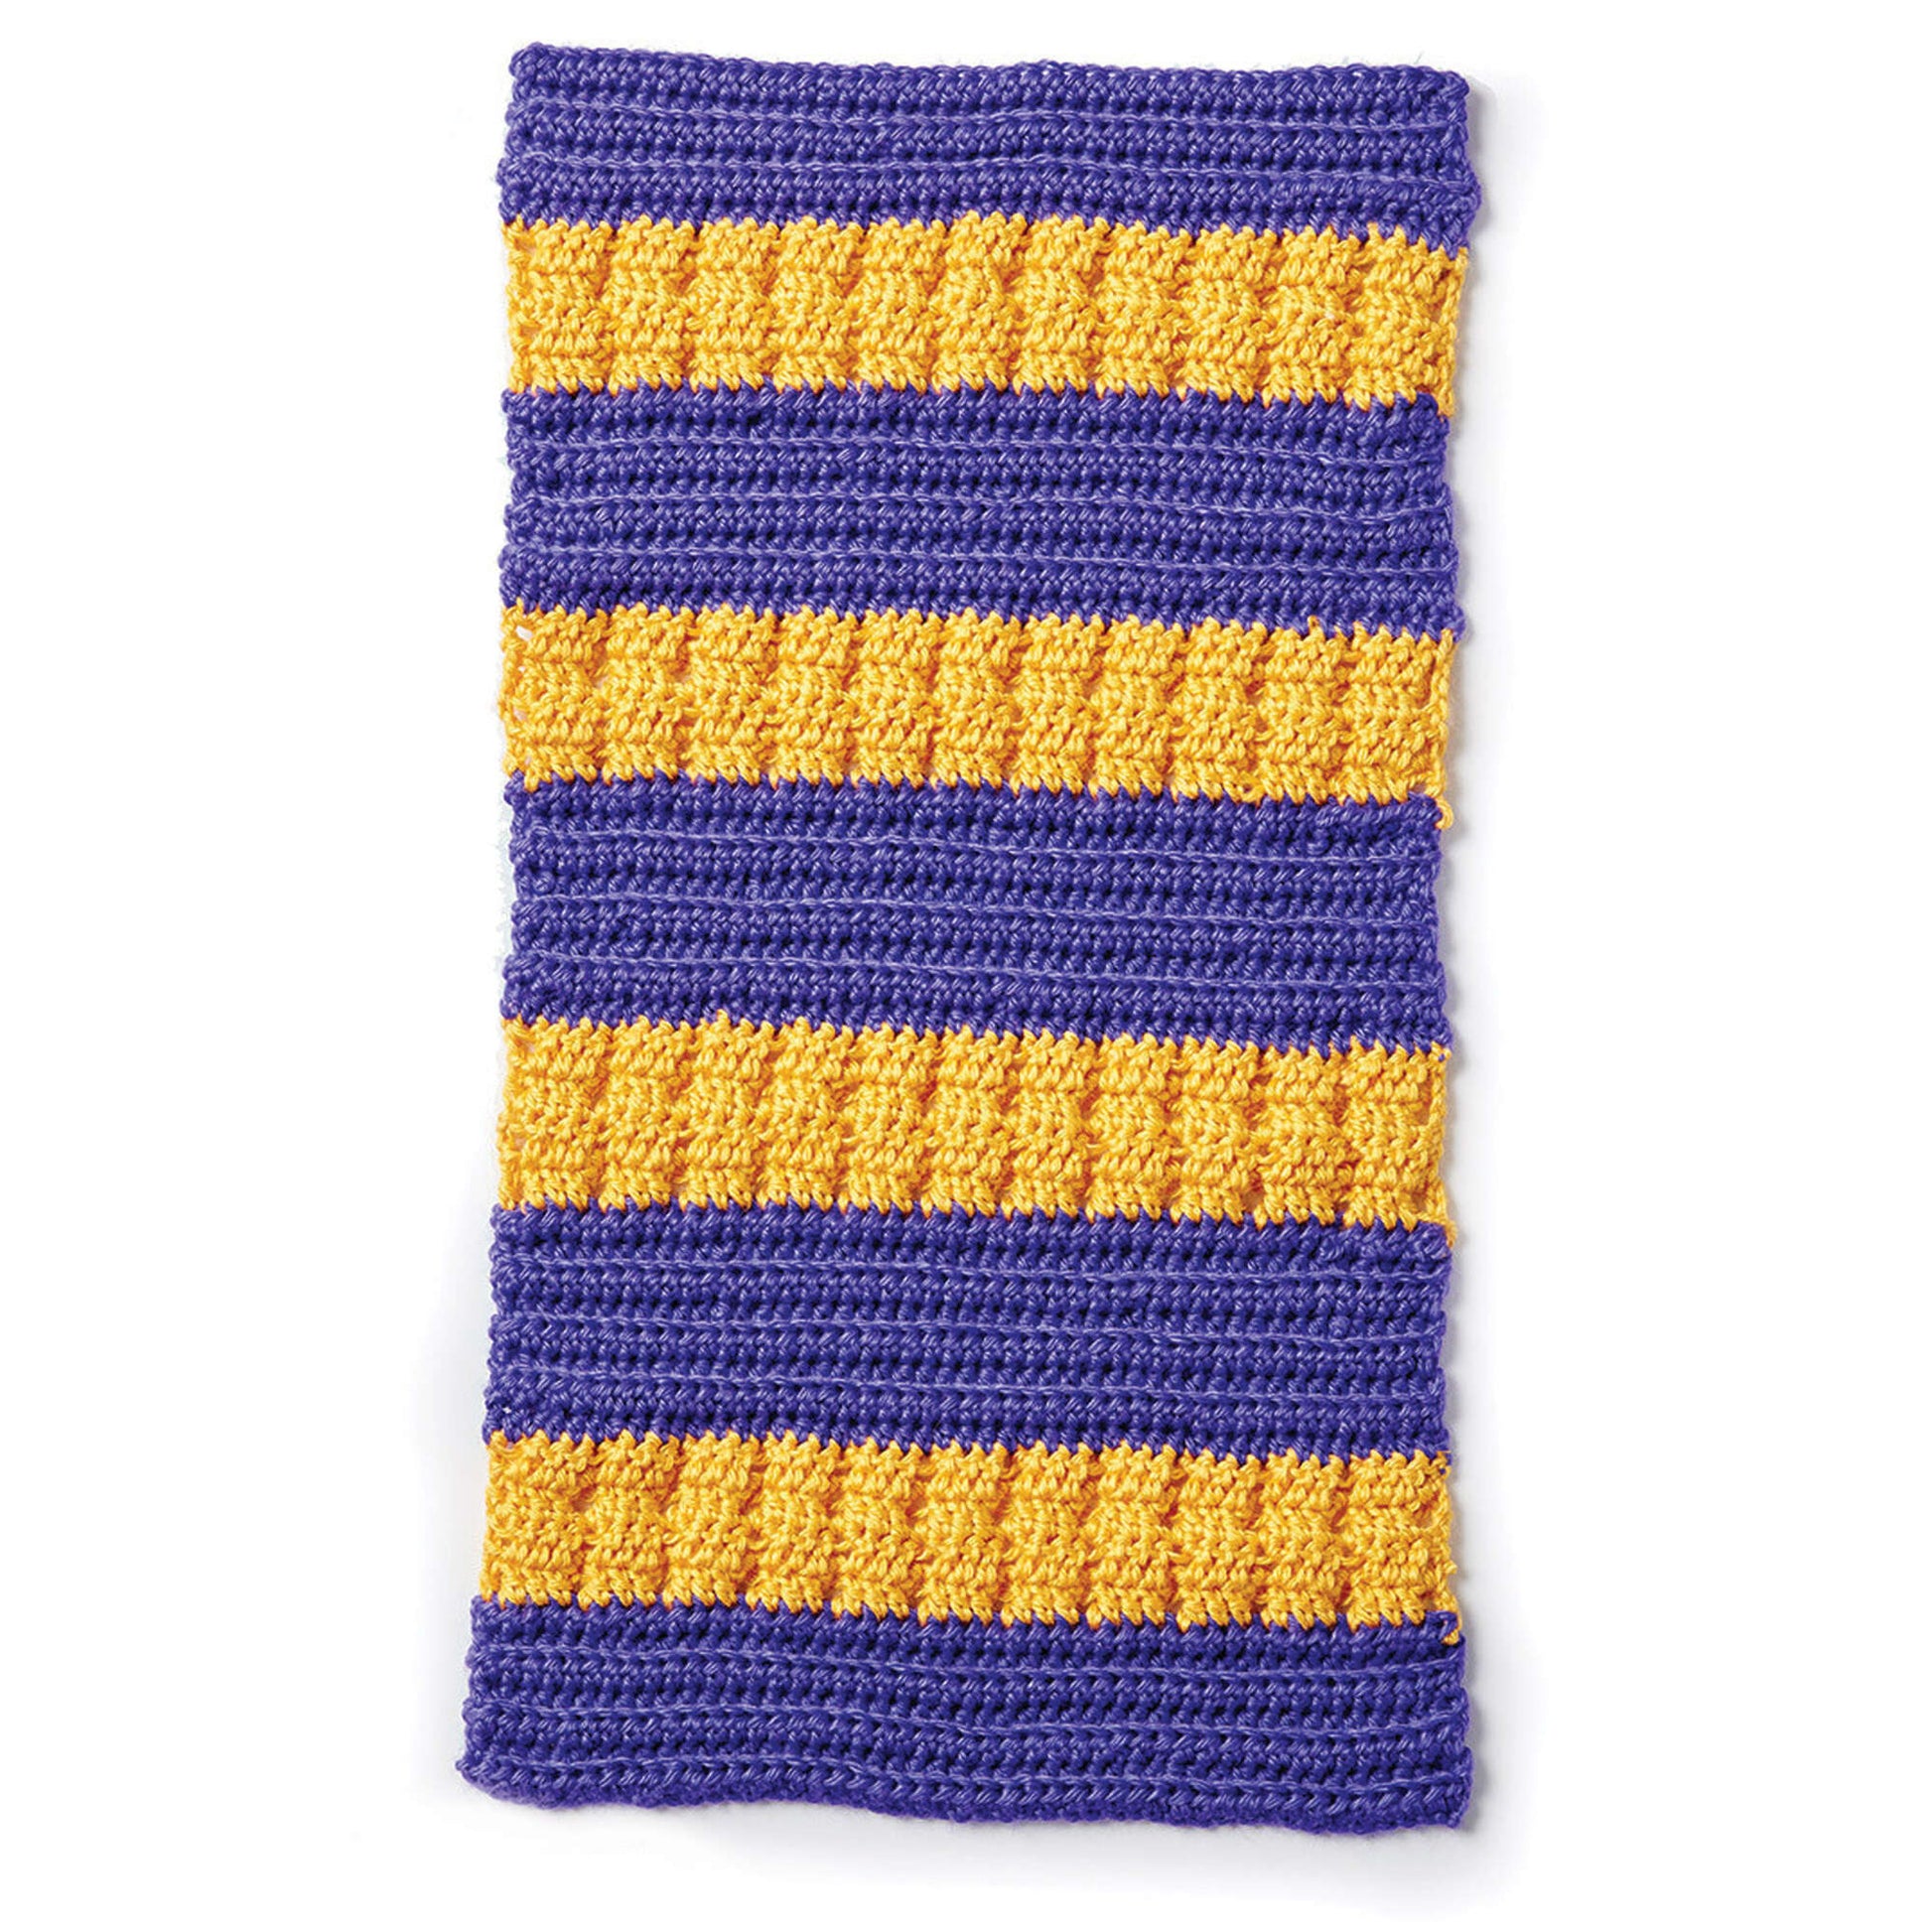 Caron School Colors Crochet Afghan Version 1